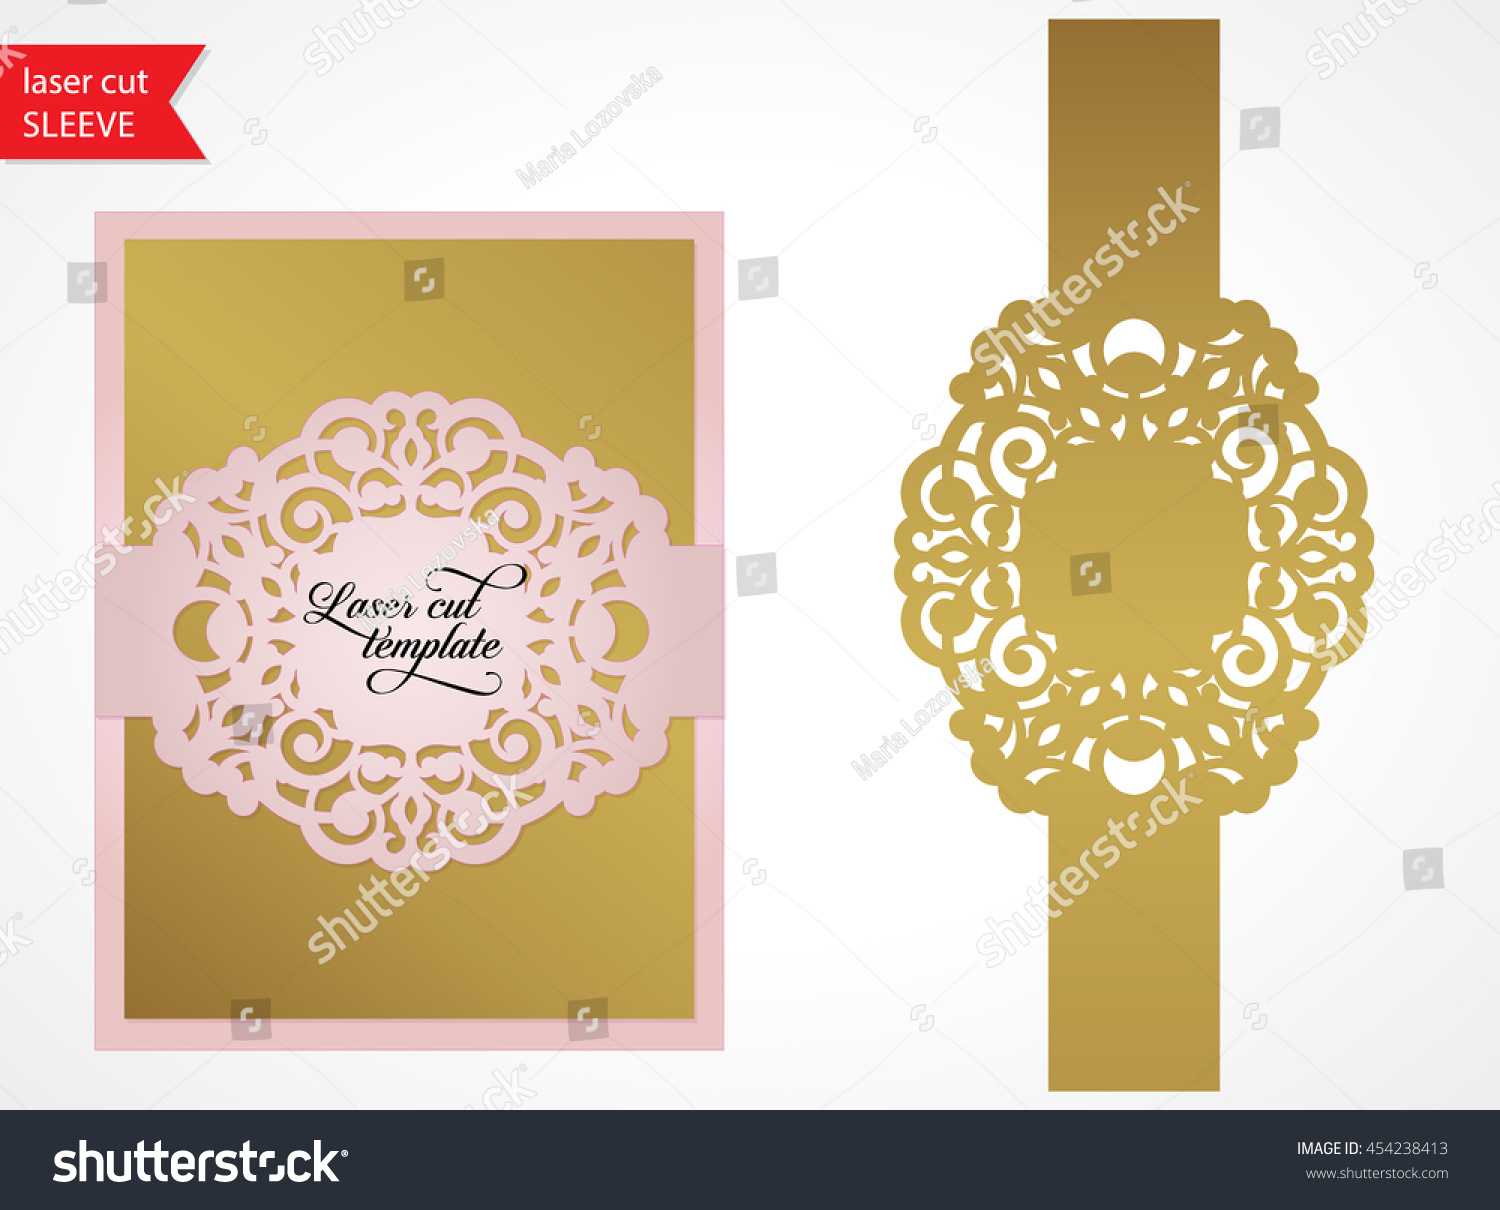 Laser Cut Wedding Invitation Template Silhouette Stock In Silhouette Cameo Card Templates